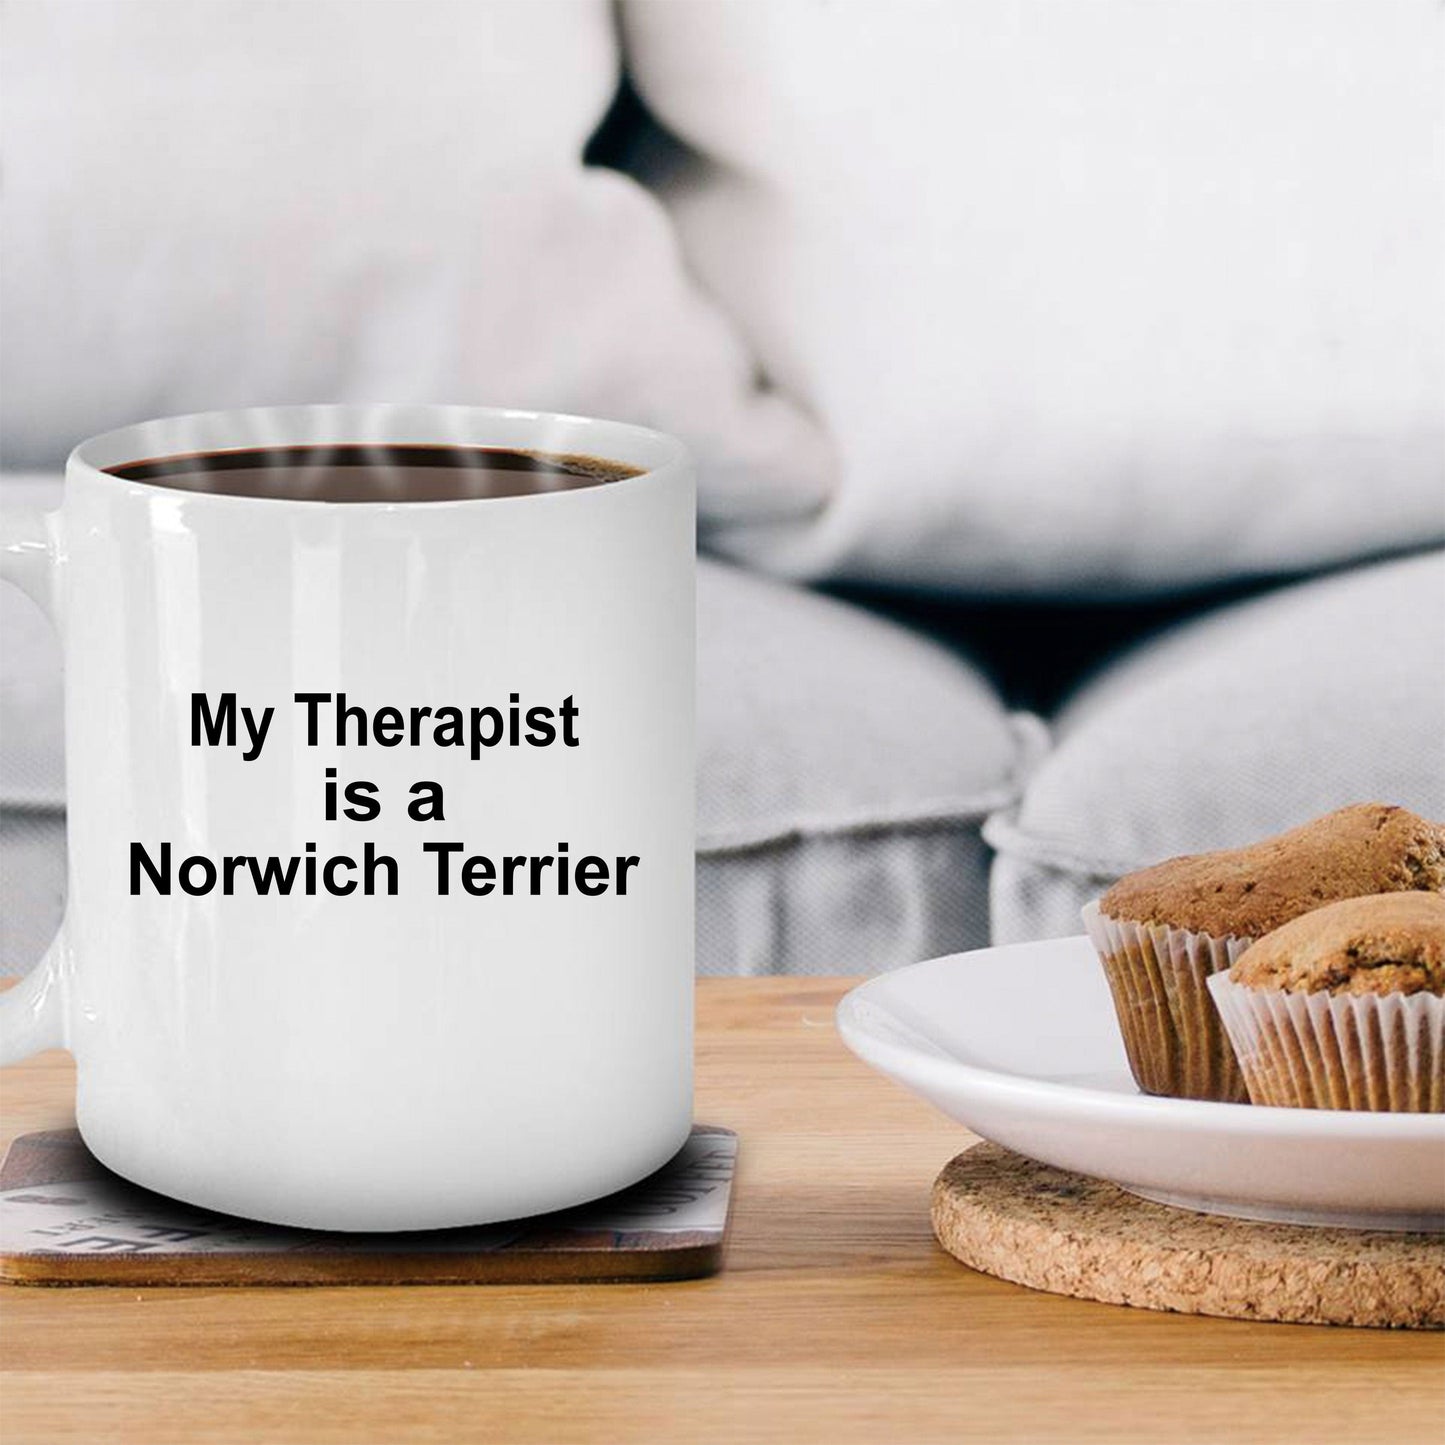 Norwich Terrier Dog Therapist Coffee Mug